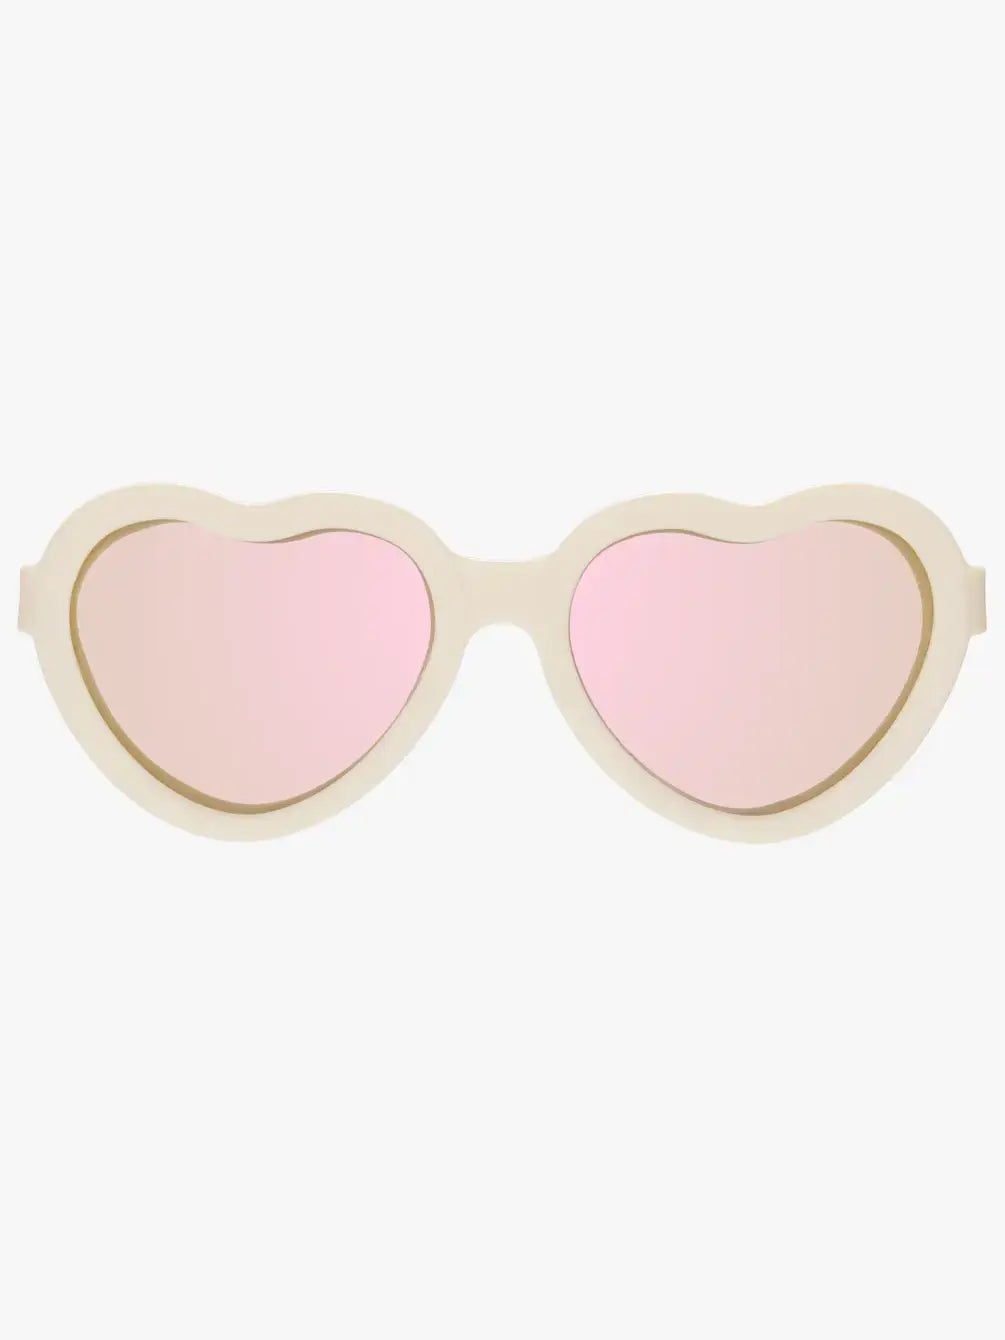 Babiator Polarized Heart Sunglasses-Sweet Cream Rose Gold Mirrored